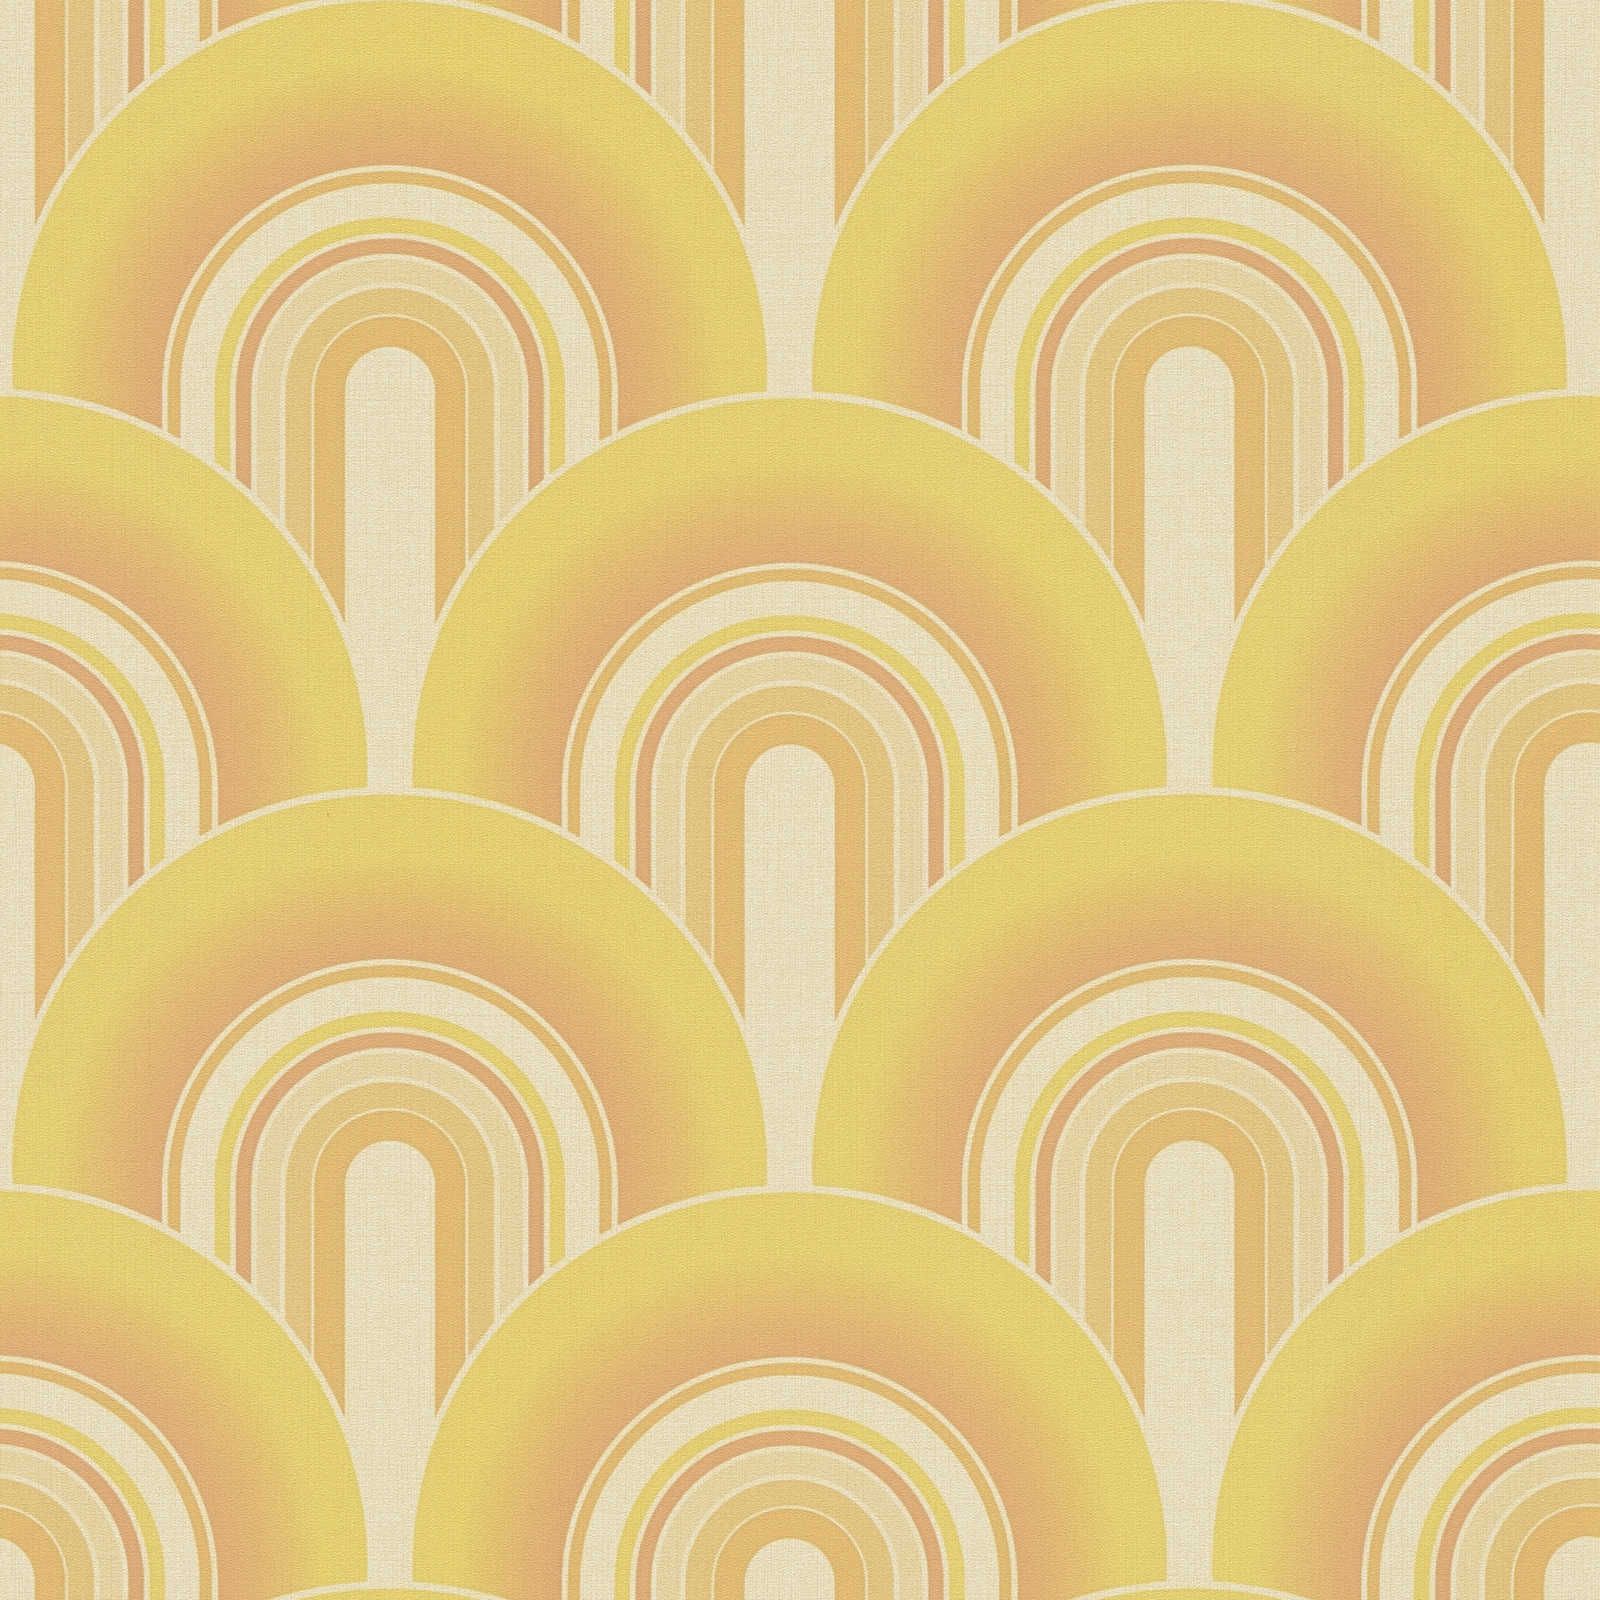         70s wallpaper with graphic retro design - yellow, orange
    